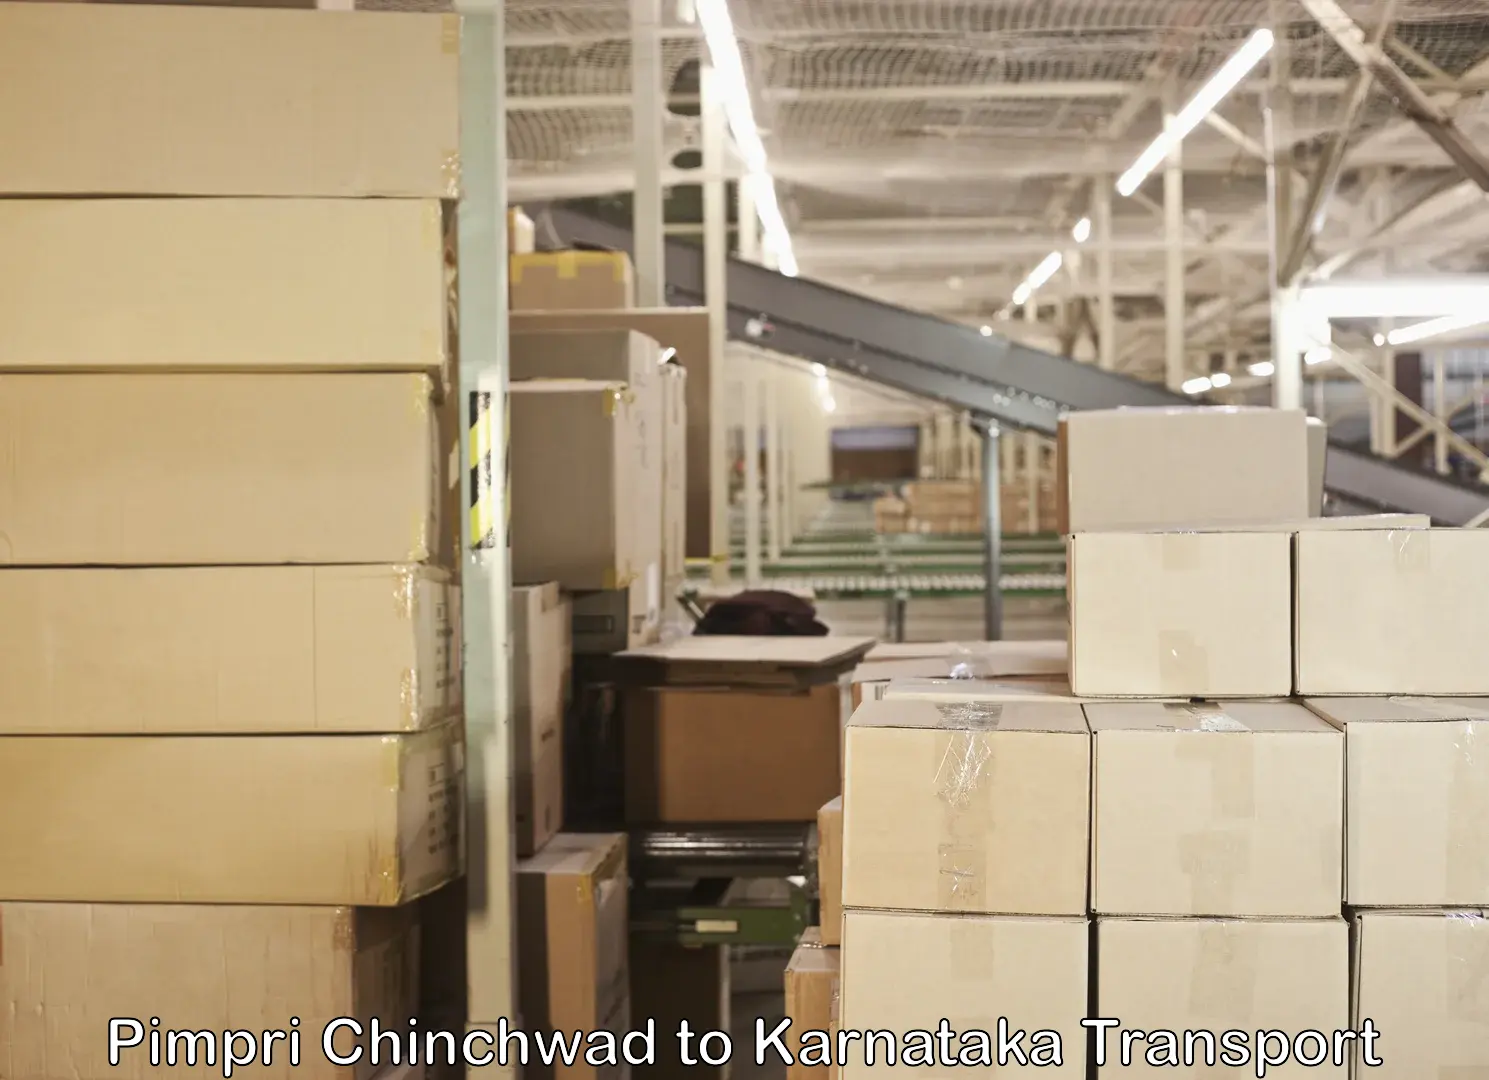 Shipping partner Pimpri Chinchwad to Karnataka